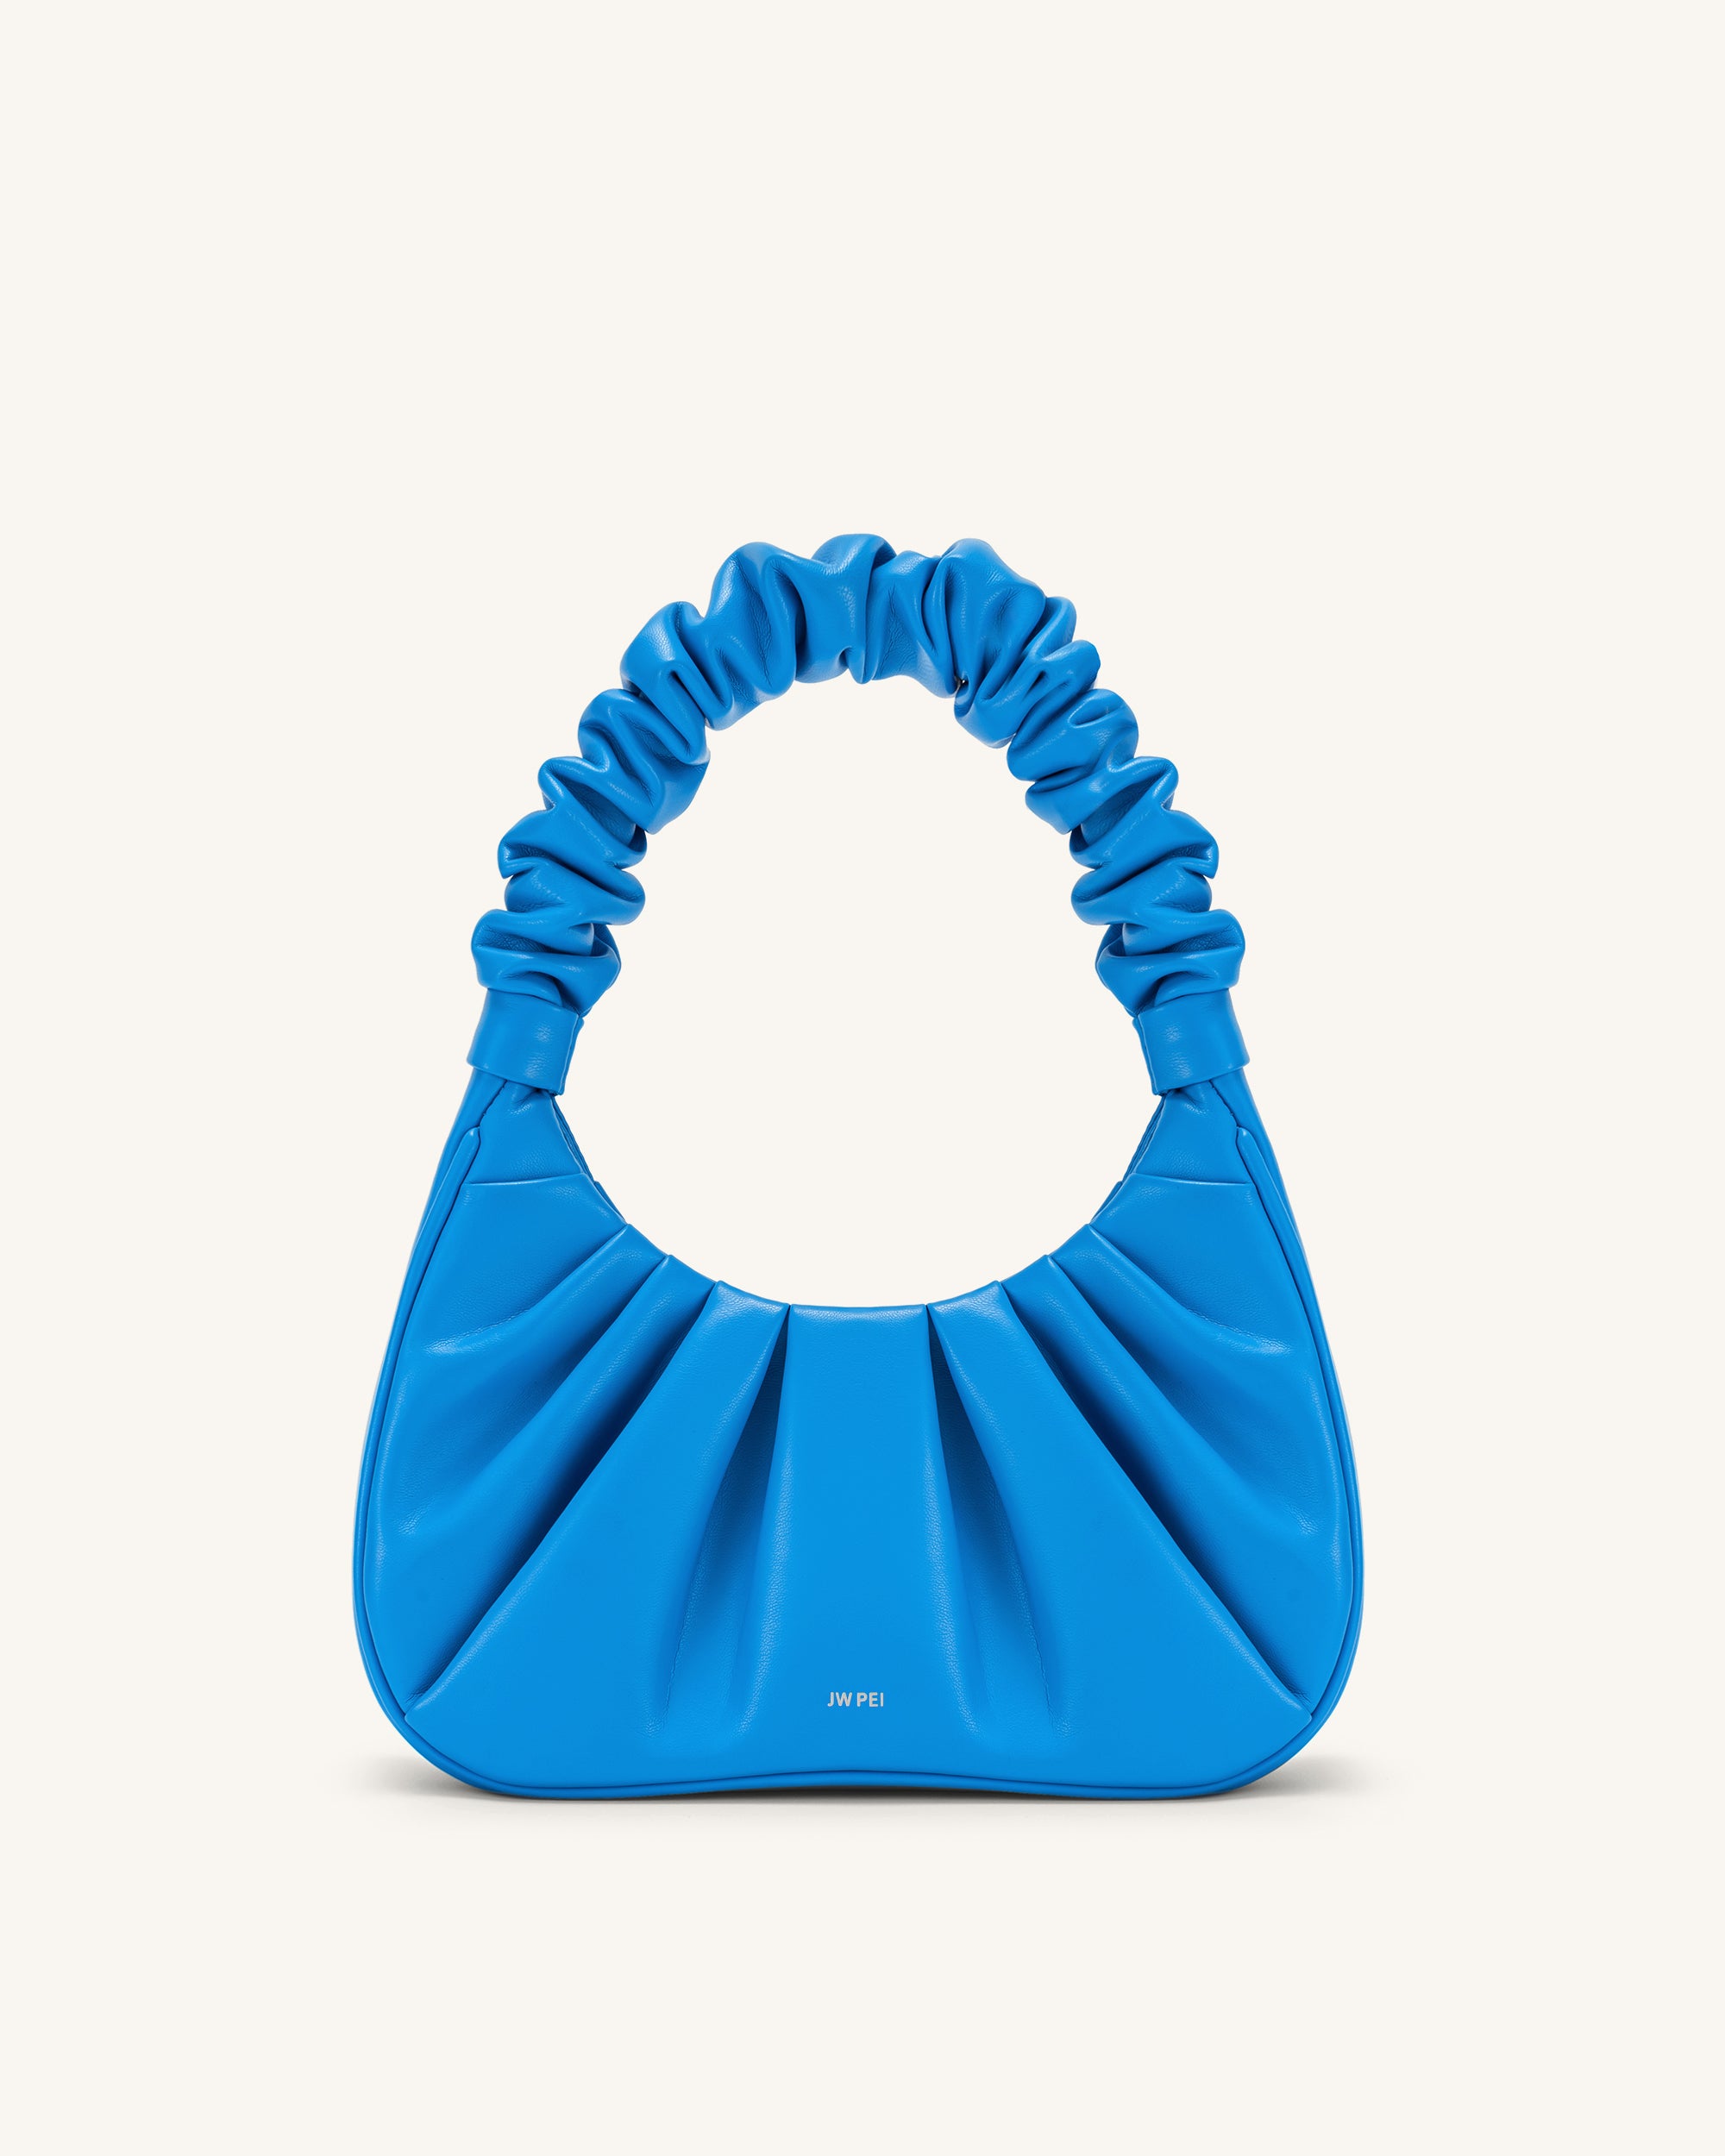 Gabbi Ruched Hobo Handbag - Lake Blue Online Shopping - JW Pei